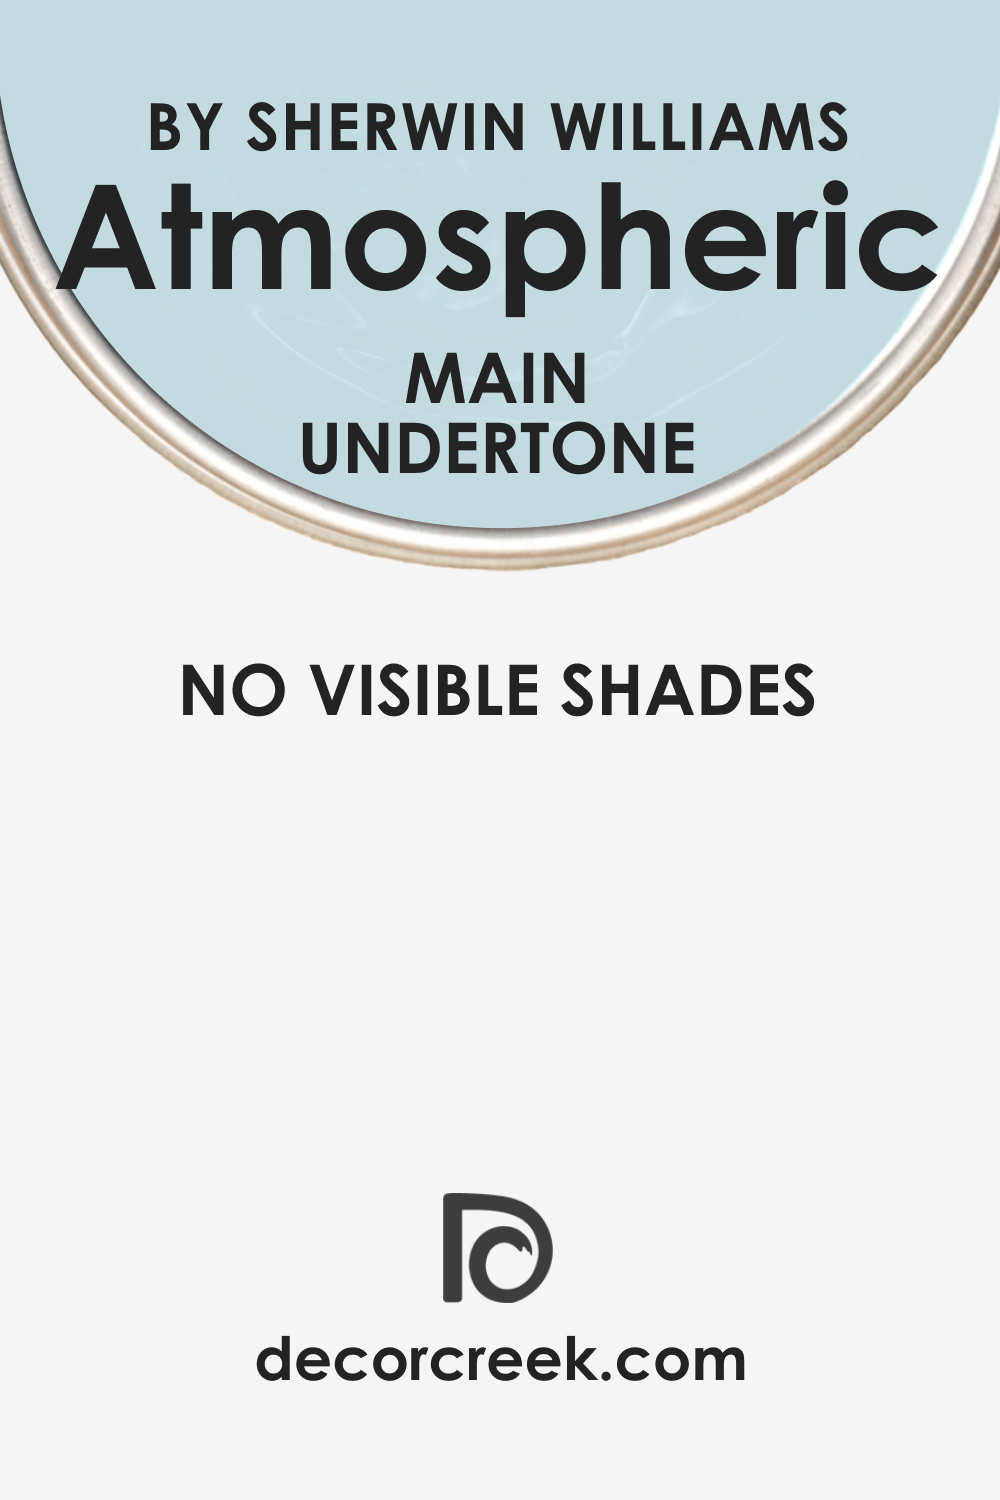 What Undertones Does Atmospheric SW 6505 Paint Color Have?